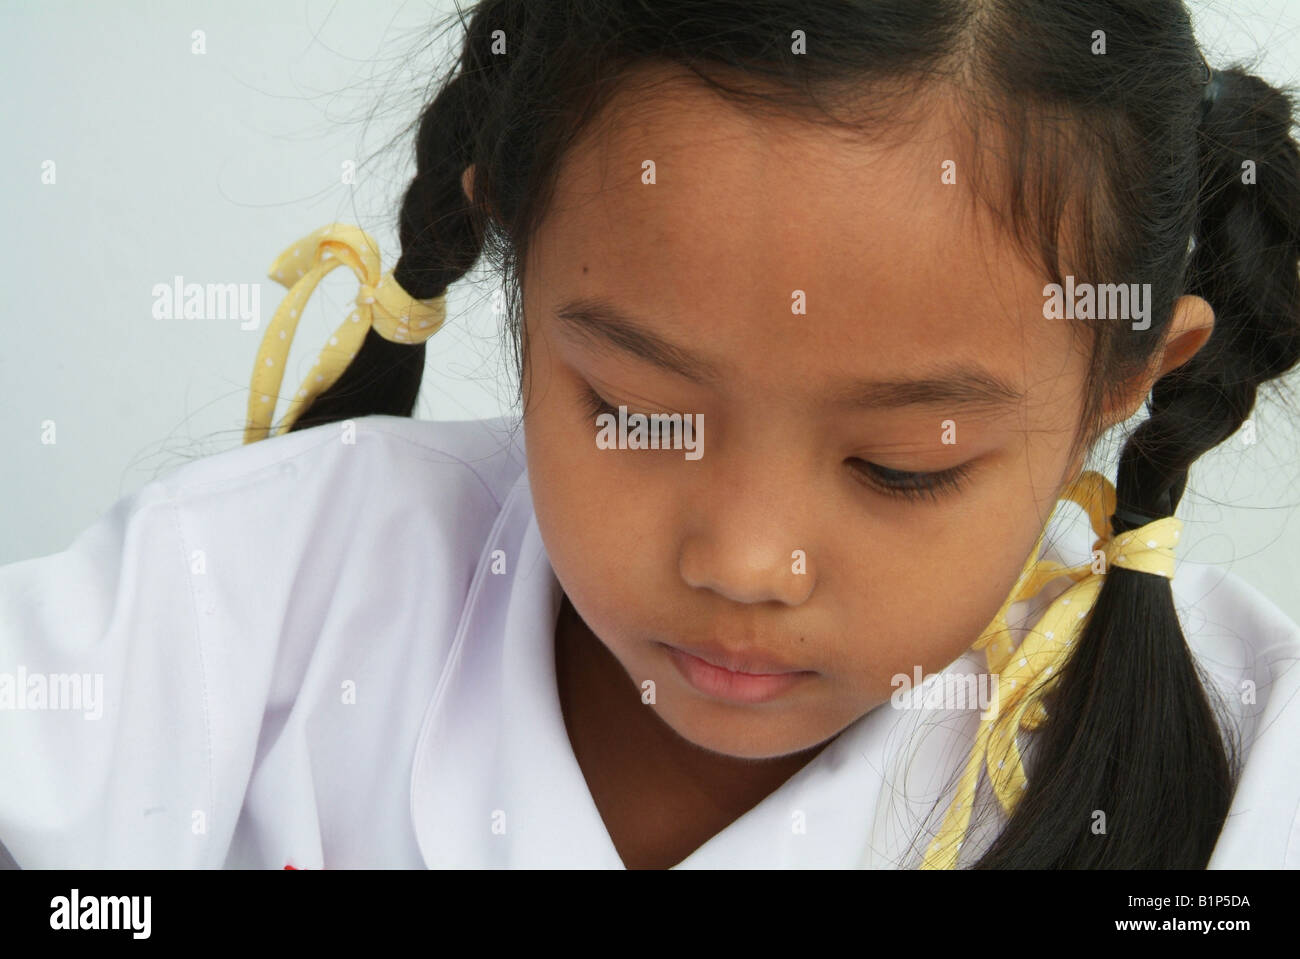 Portrait Of Thai Girl 8 Years Old In School Uniform Stock Photo